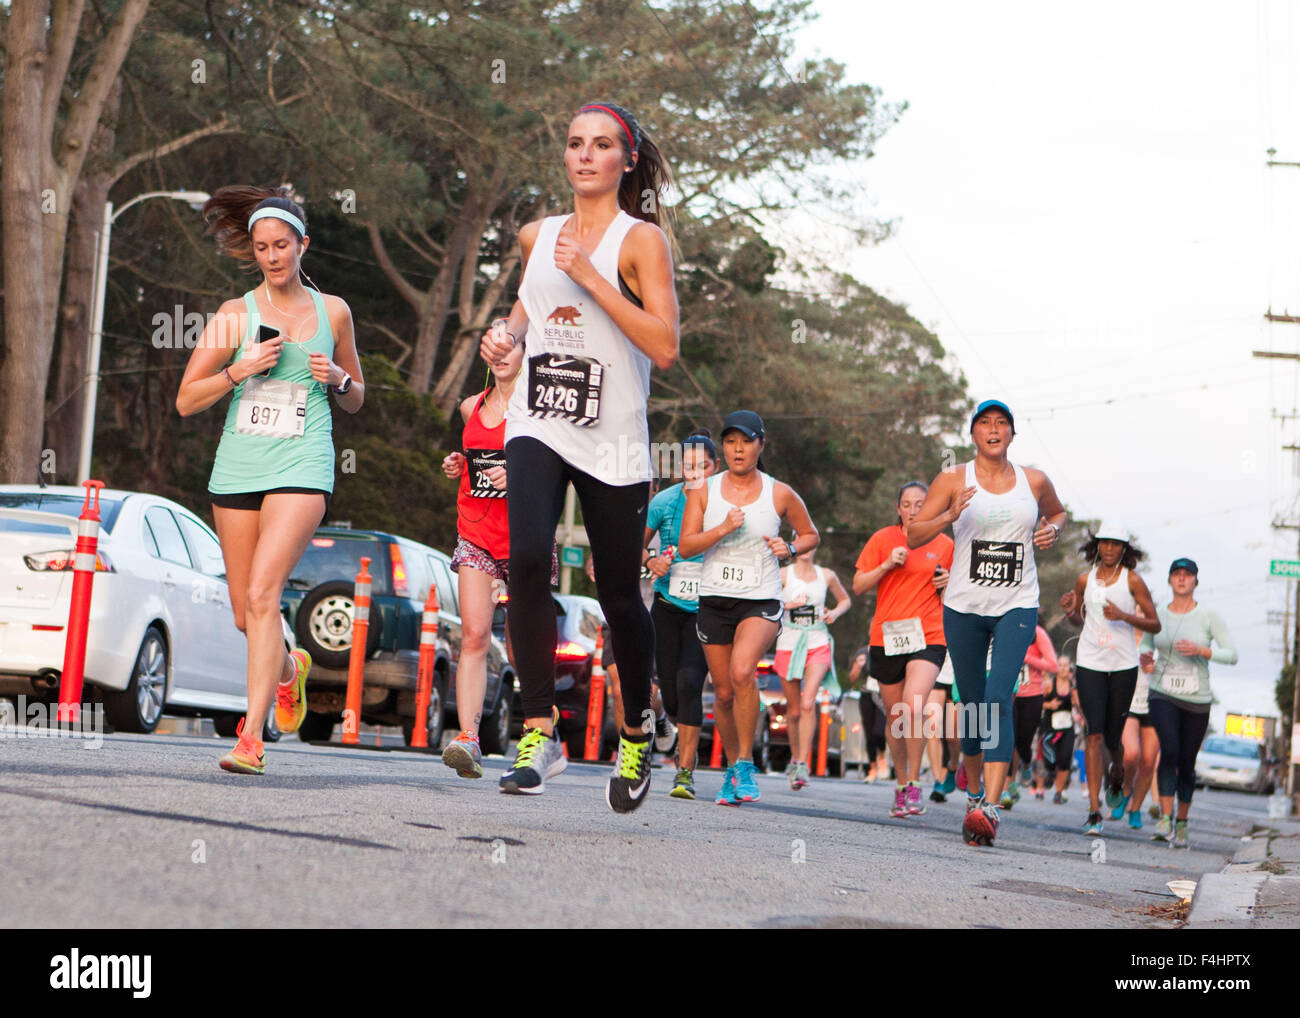 Nike womens half marathon hi-res stock photography and images - Alamy